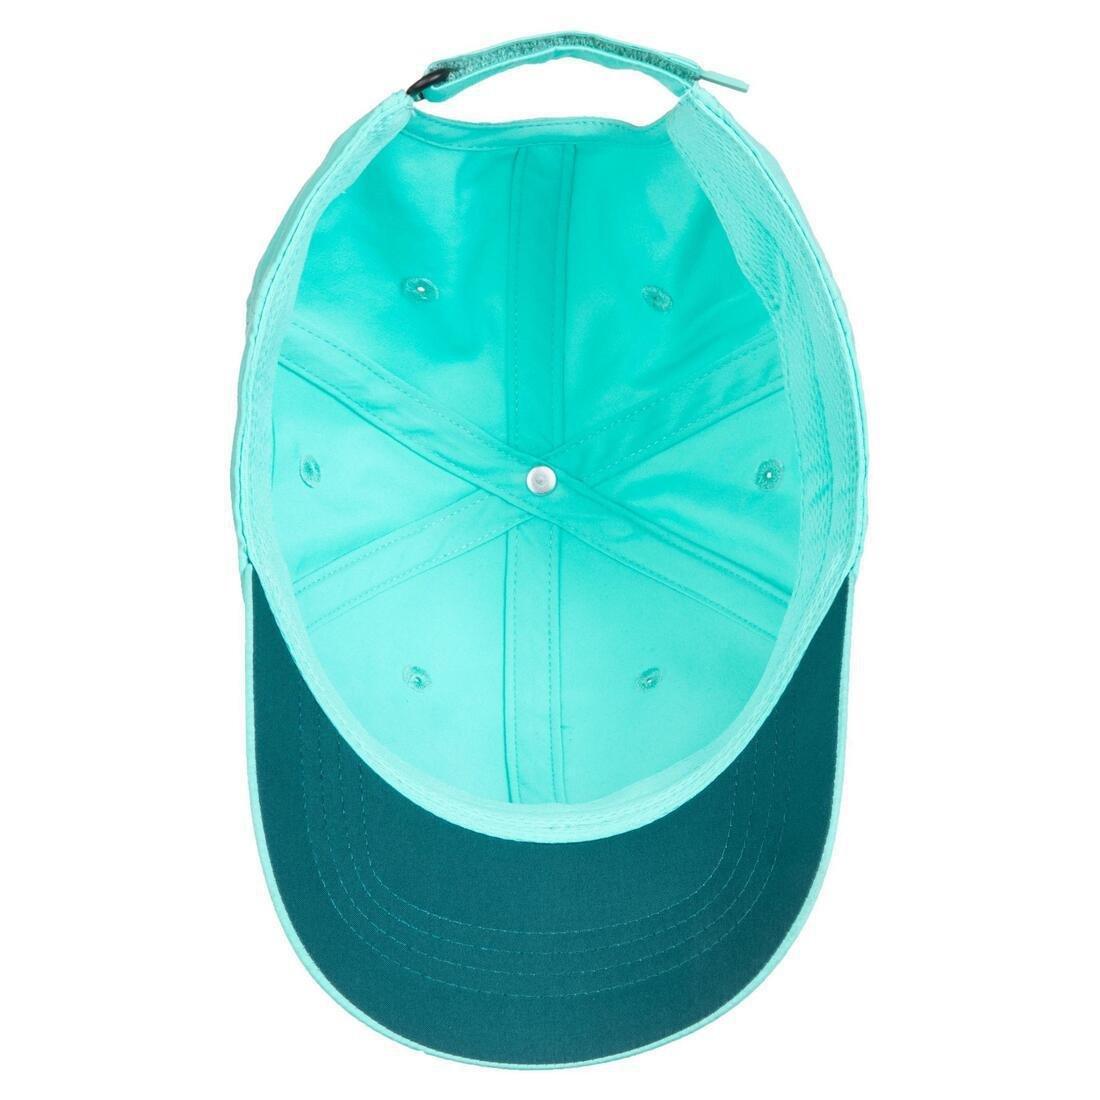 ARTENGO - Tennis Cap Tc500, Navy/Turquoise Green